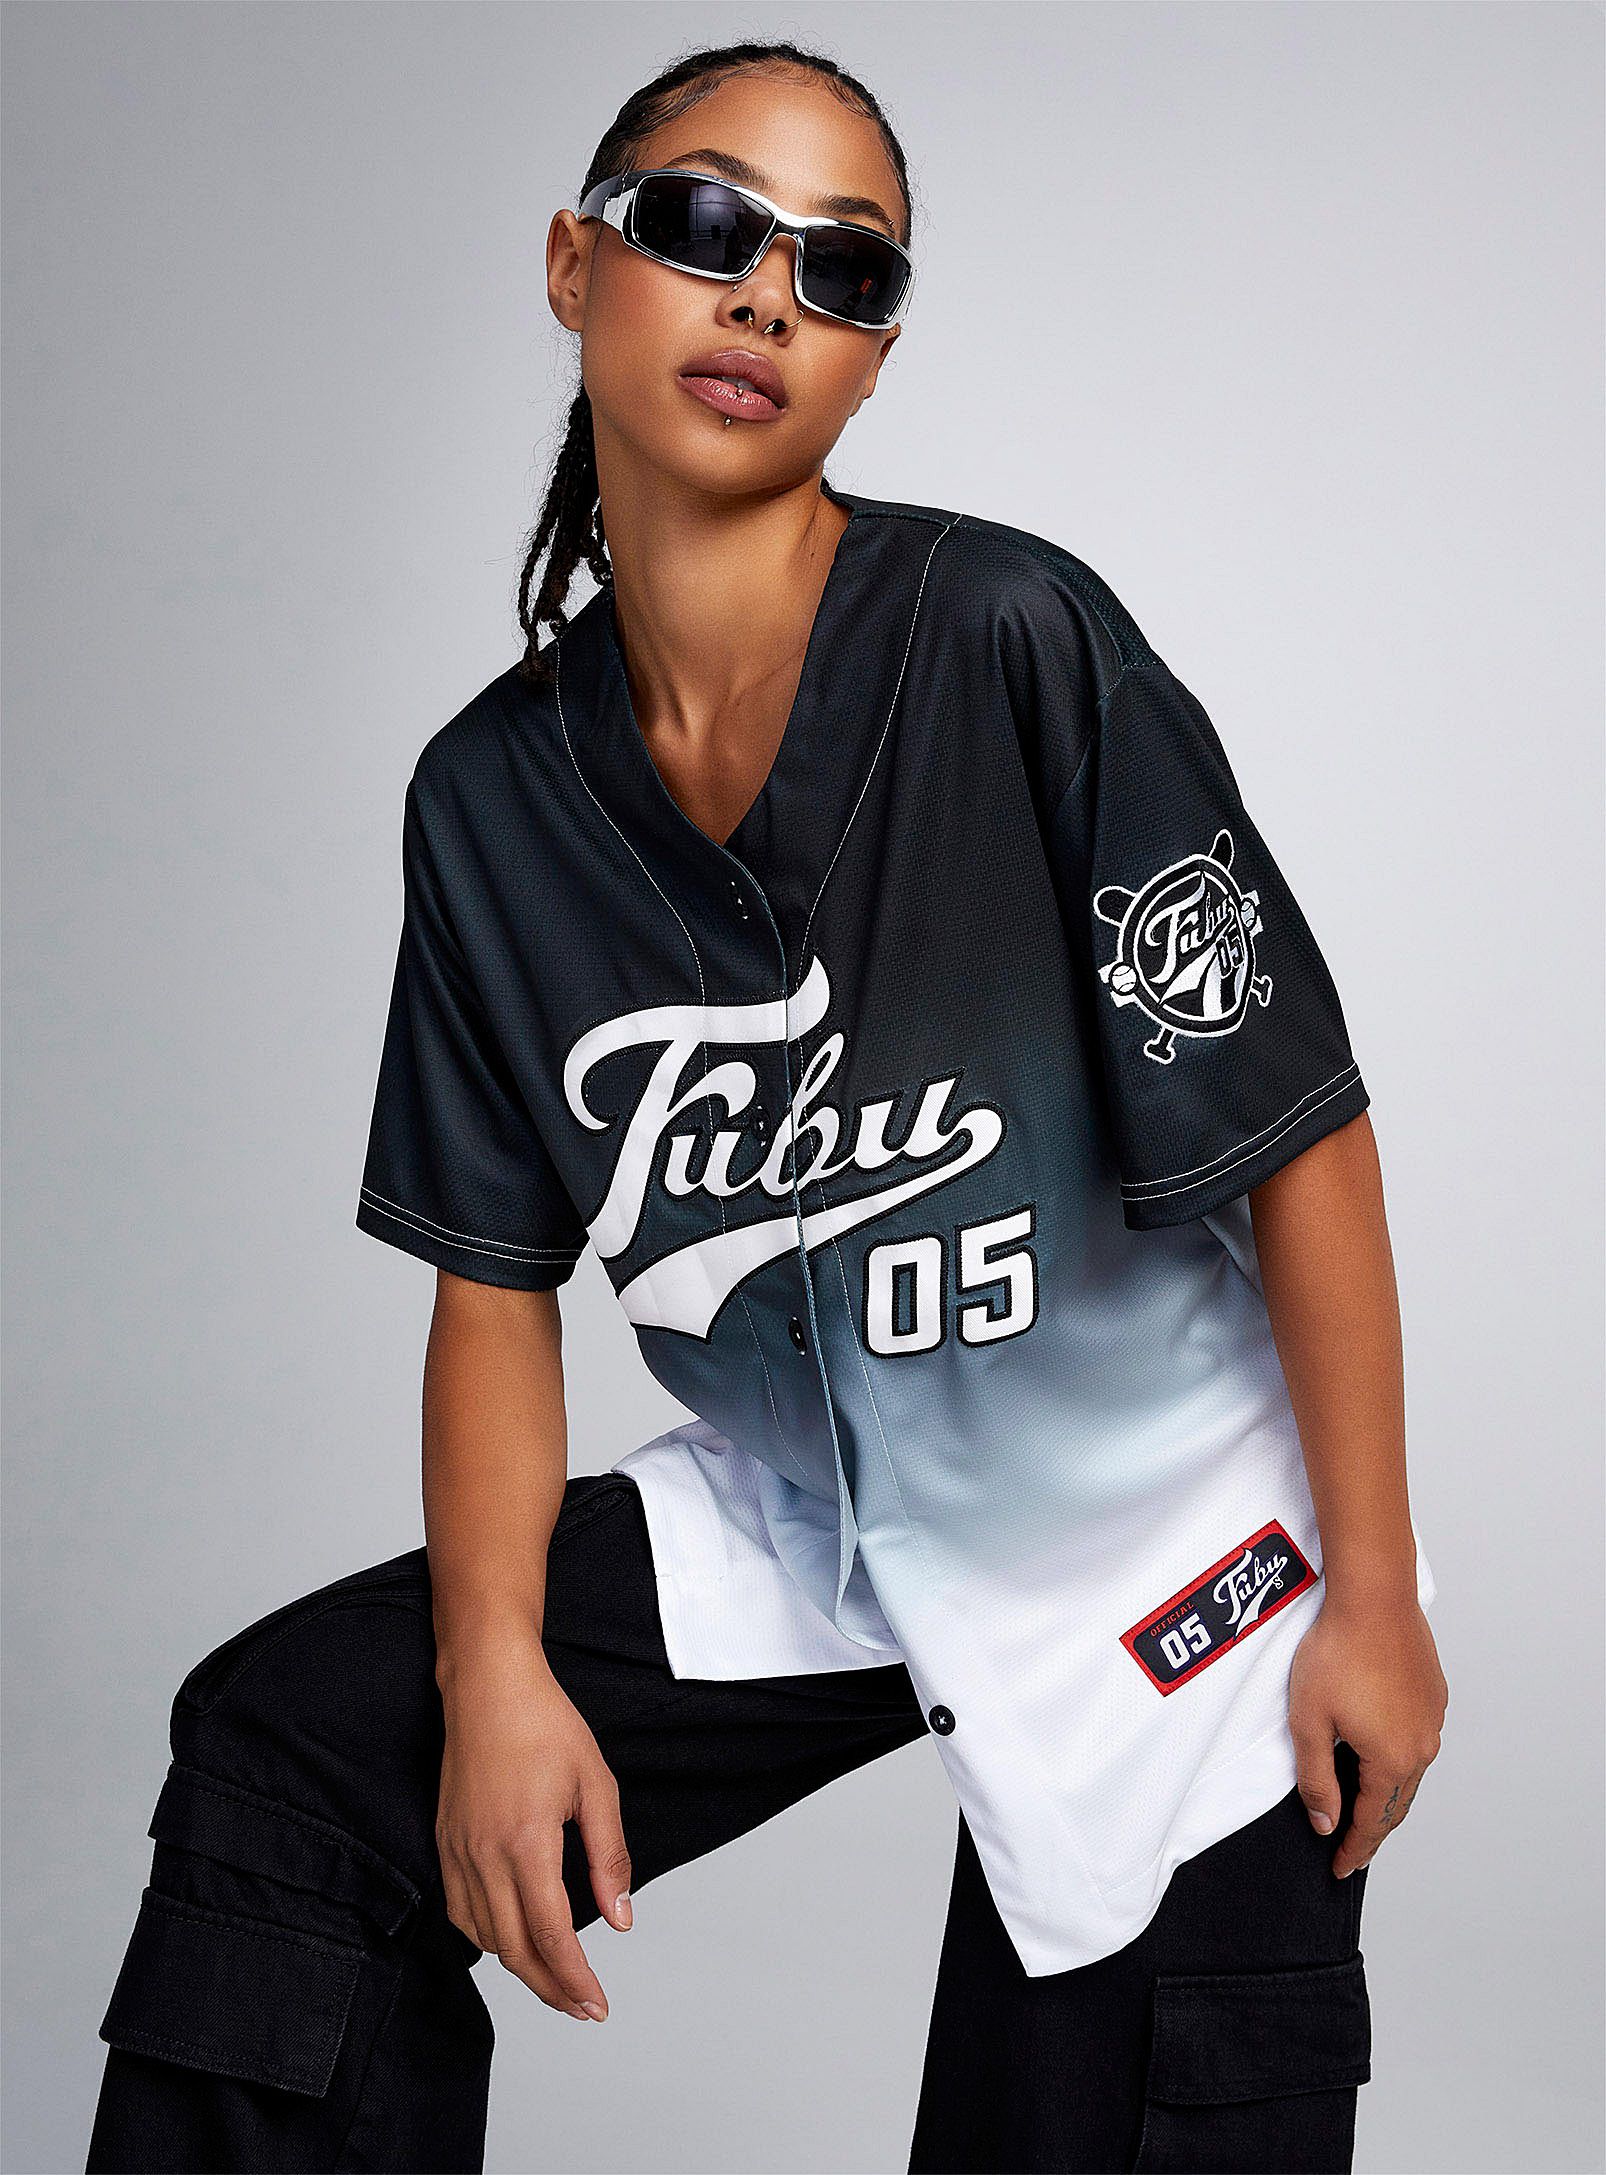 FUBU - Women's 05 gradient baseball shirt